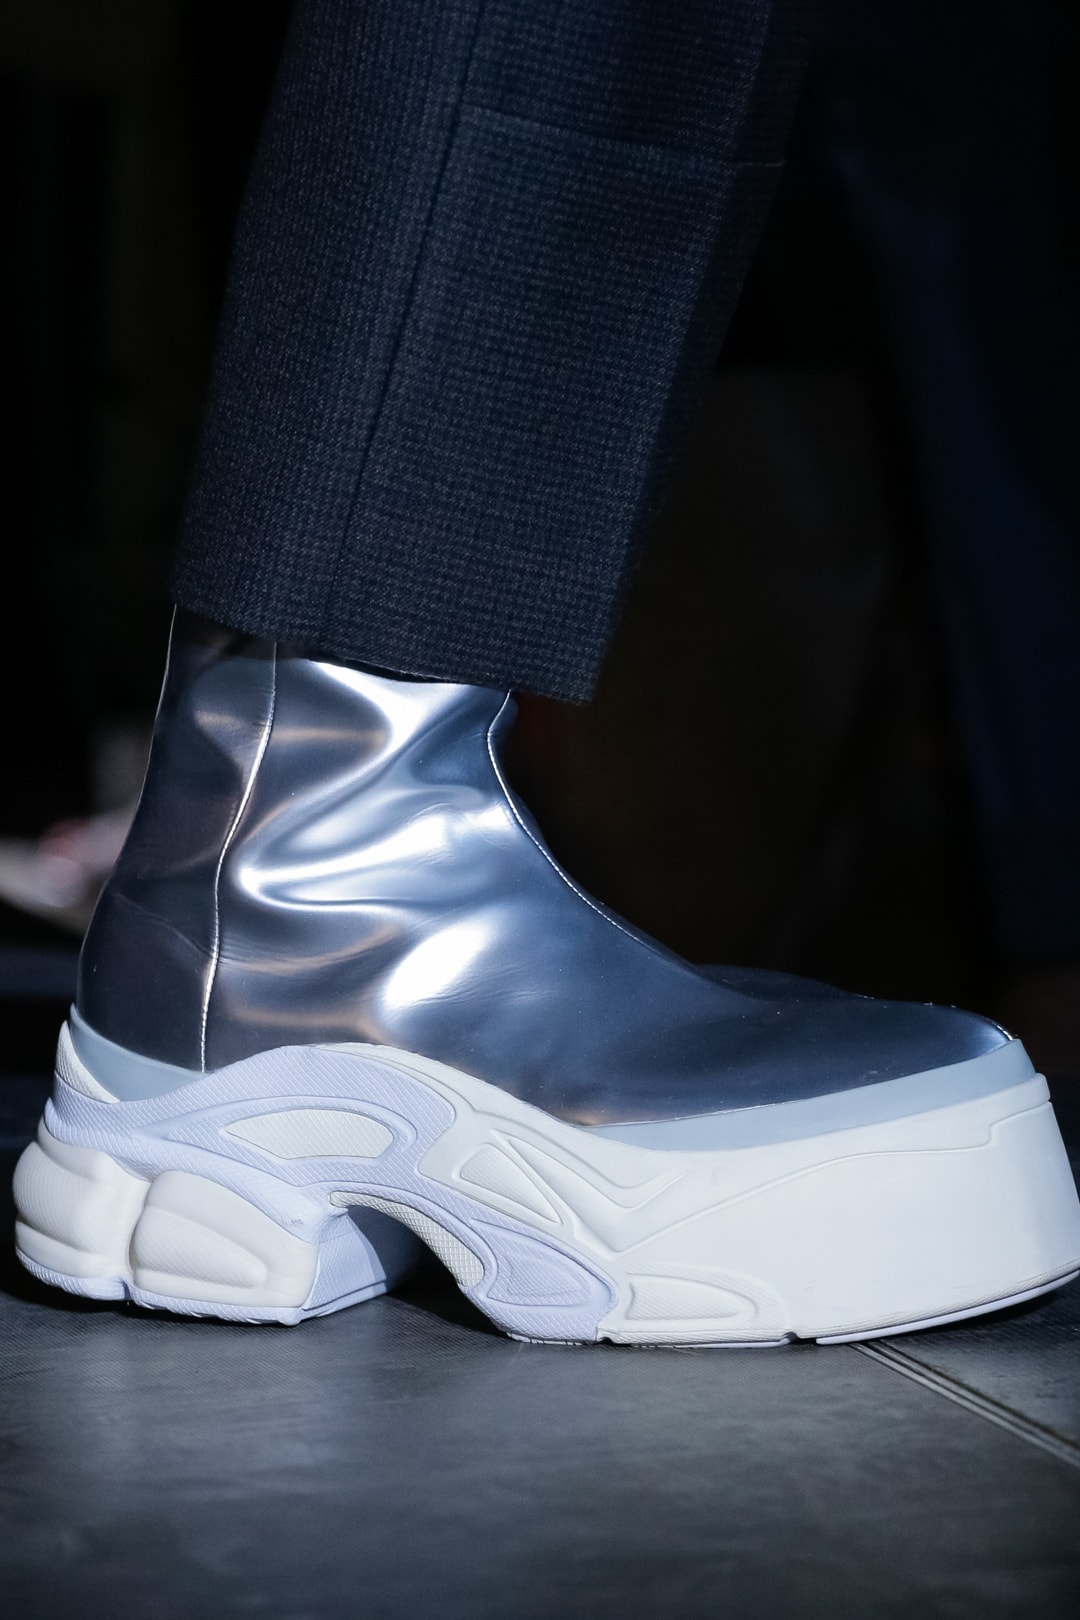 adidas Originals by Raf Simons 2019 春夏鞋履系列於巴黎時裝周亮相